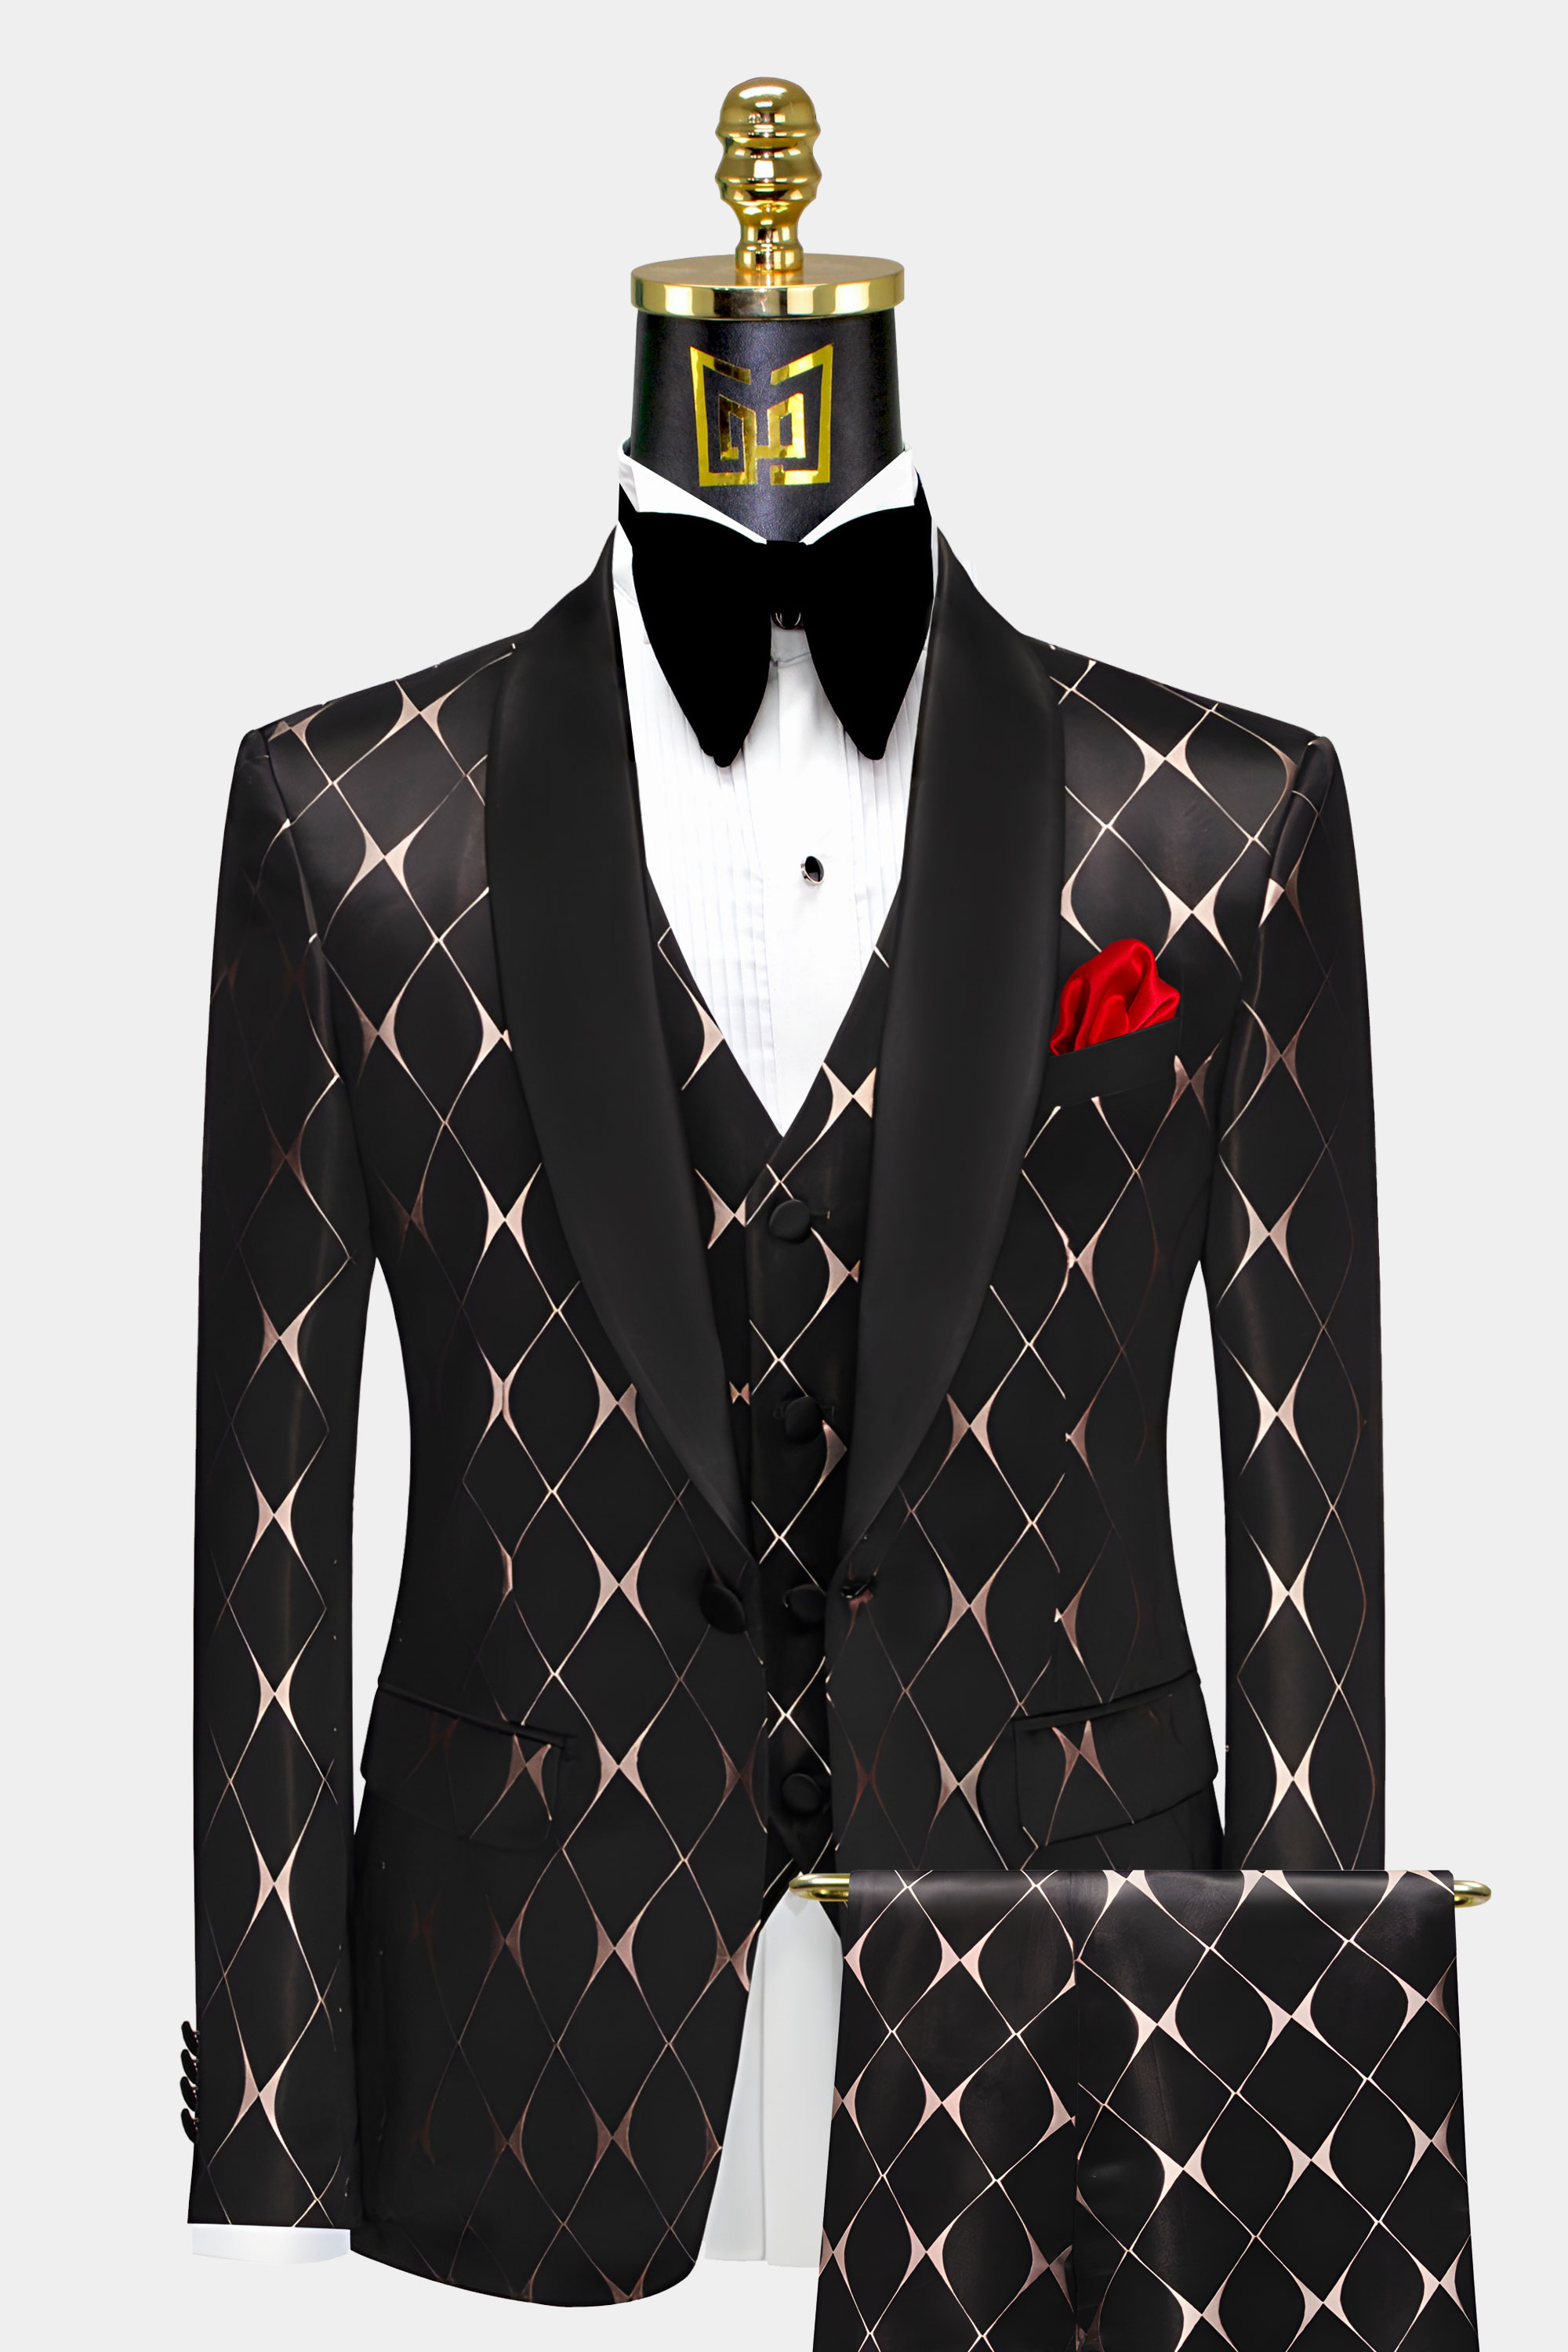 Black-and-Rose-Gold-Tuxedo-Wedding-Groom-Prom-Suit-from-Gentlemansguru.com